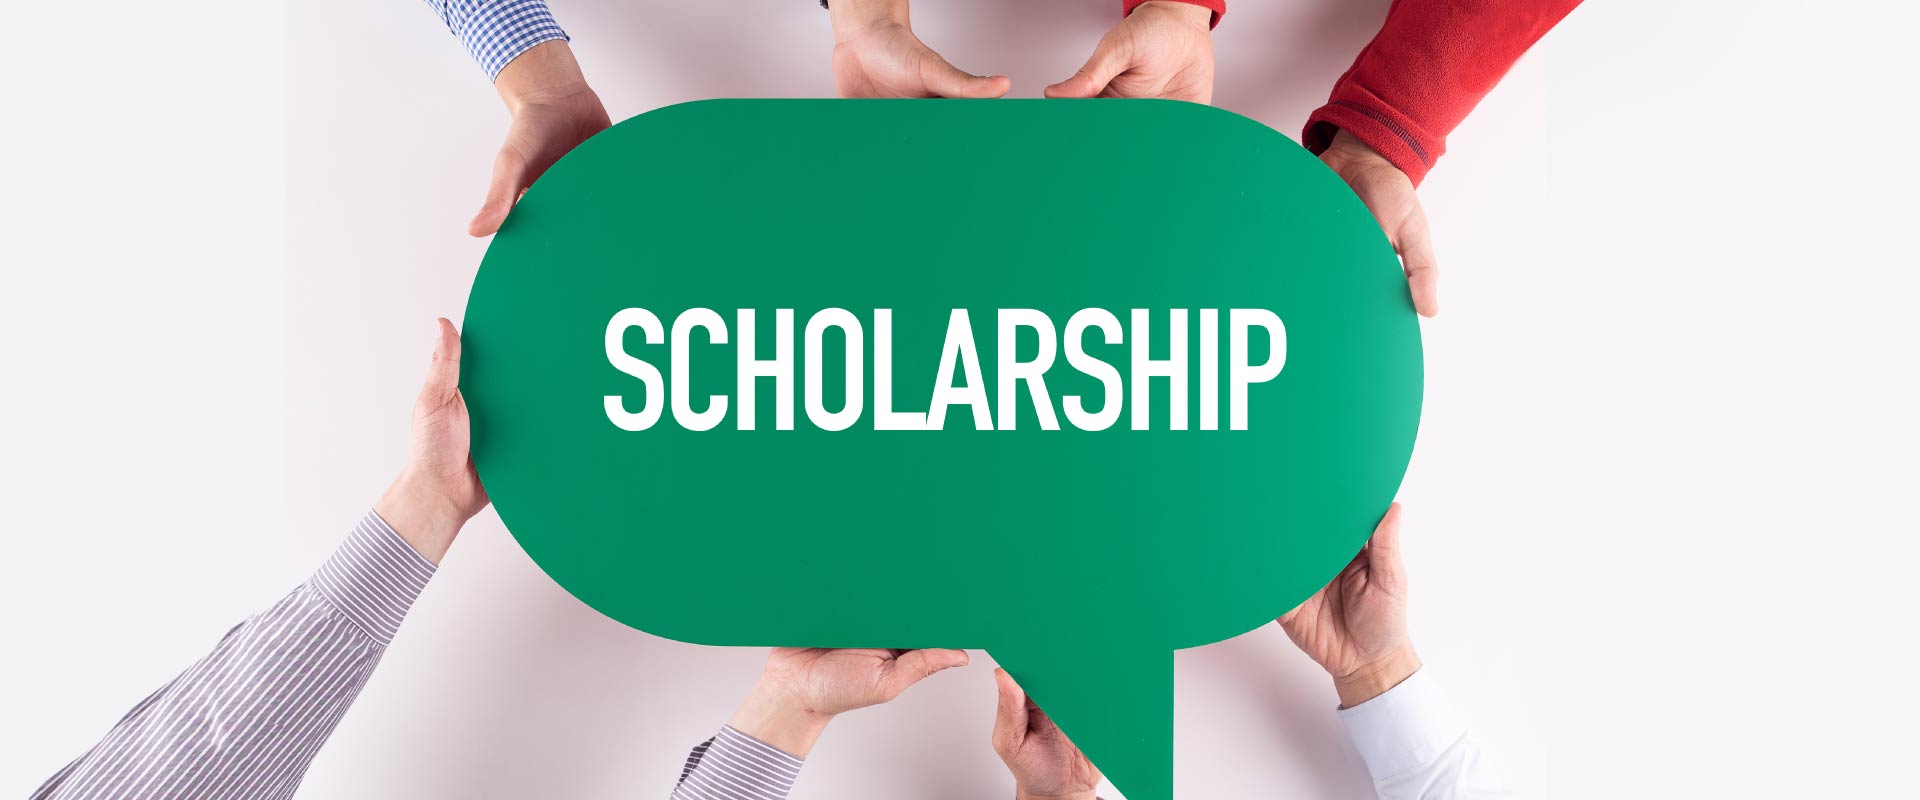 SEN Pharma's scholarship - Fostering Knowledge